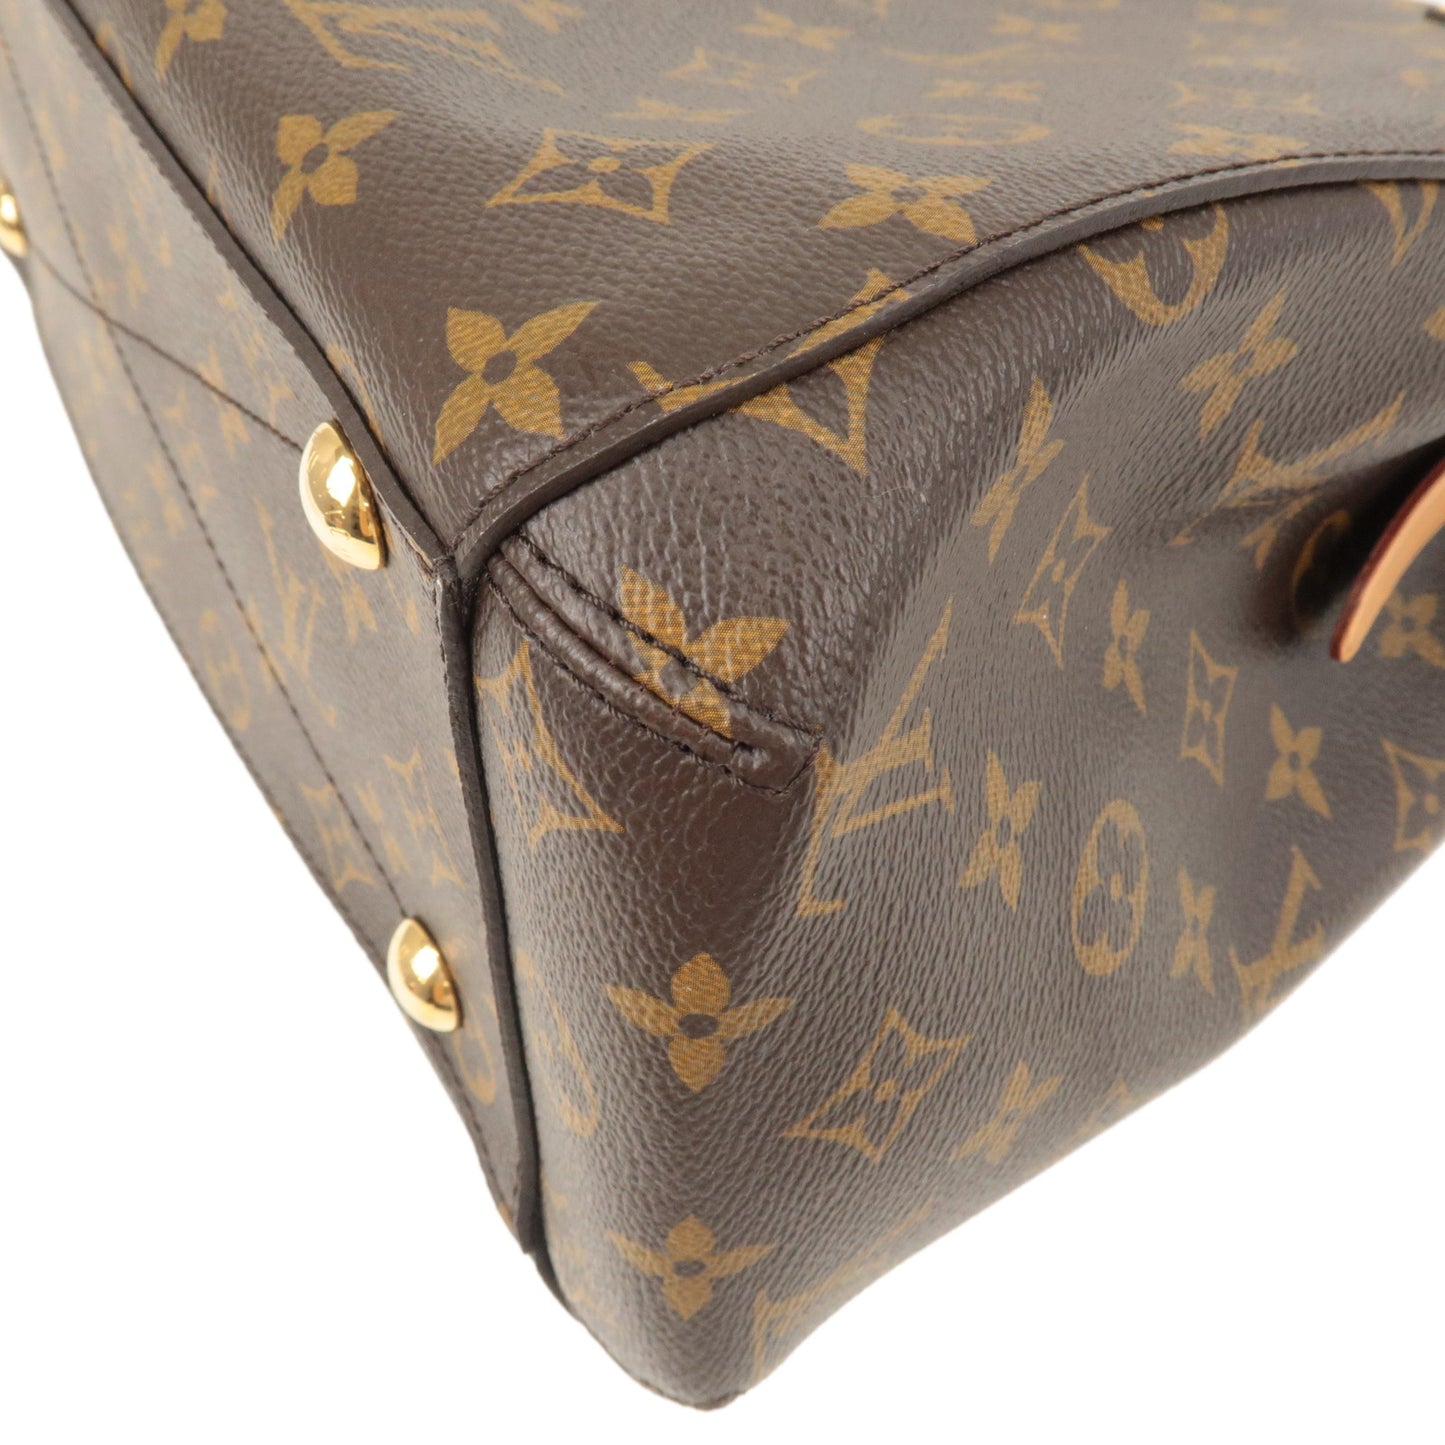 Louis Vuitton Monogram Montaigne MM 2Way Bag Hand Bag M41056